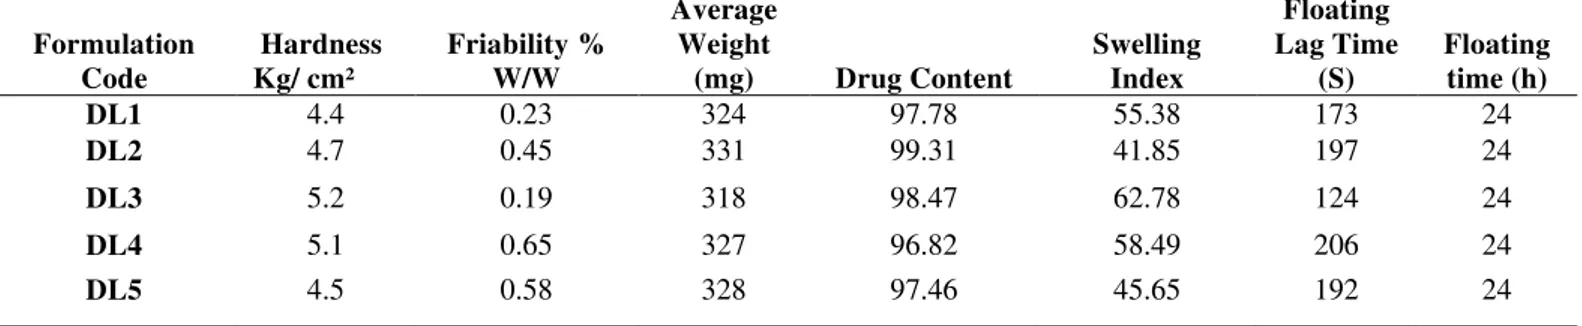 Table 2. Evaluation of FDDS formulations  Formulation  Code   Hardness Kg/ cm²  Friability % W/W  Average Weight (mg)  Drug Content   Swelling Index  Floating  Lag Time (S)  Floating time (h)  DL1  4.4  0.23  324  97.78  55.38  173  24  DL2  4.7  0.45  331